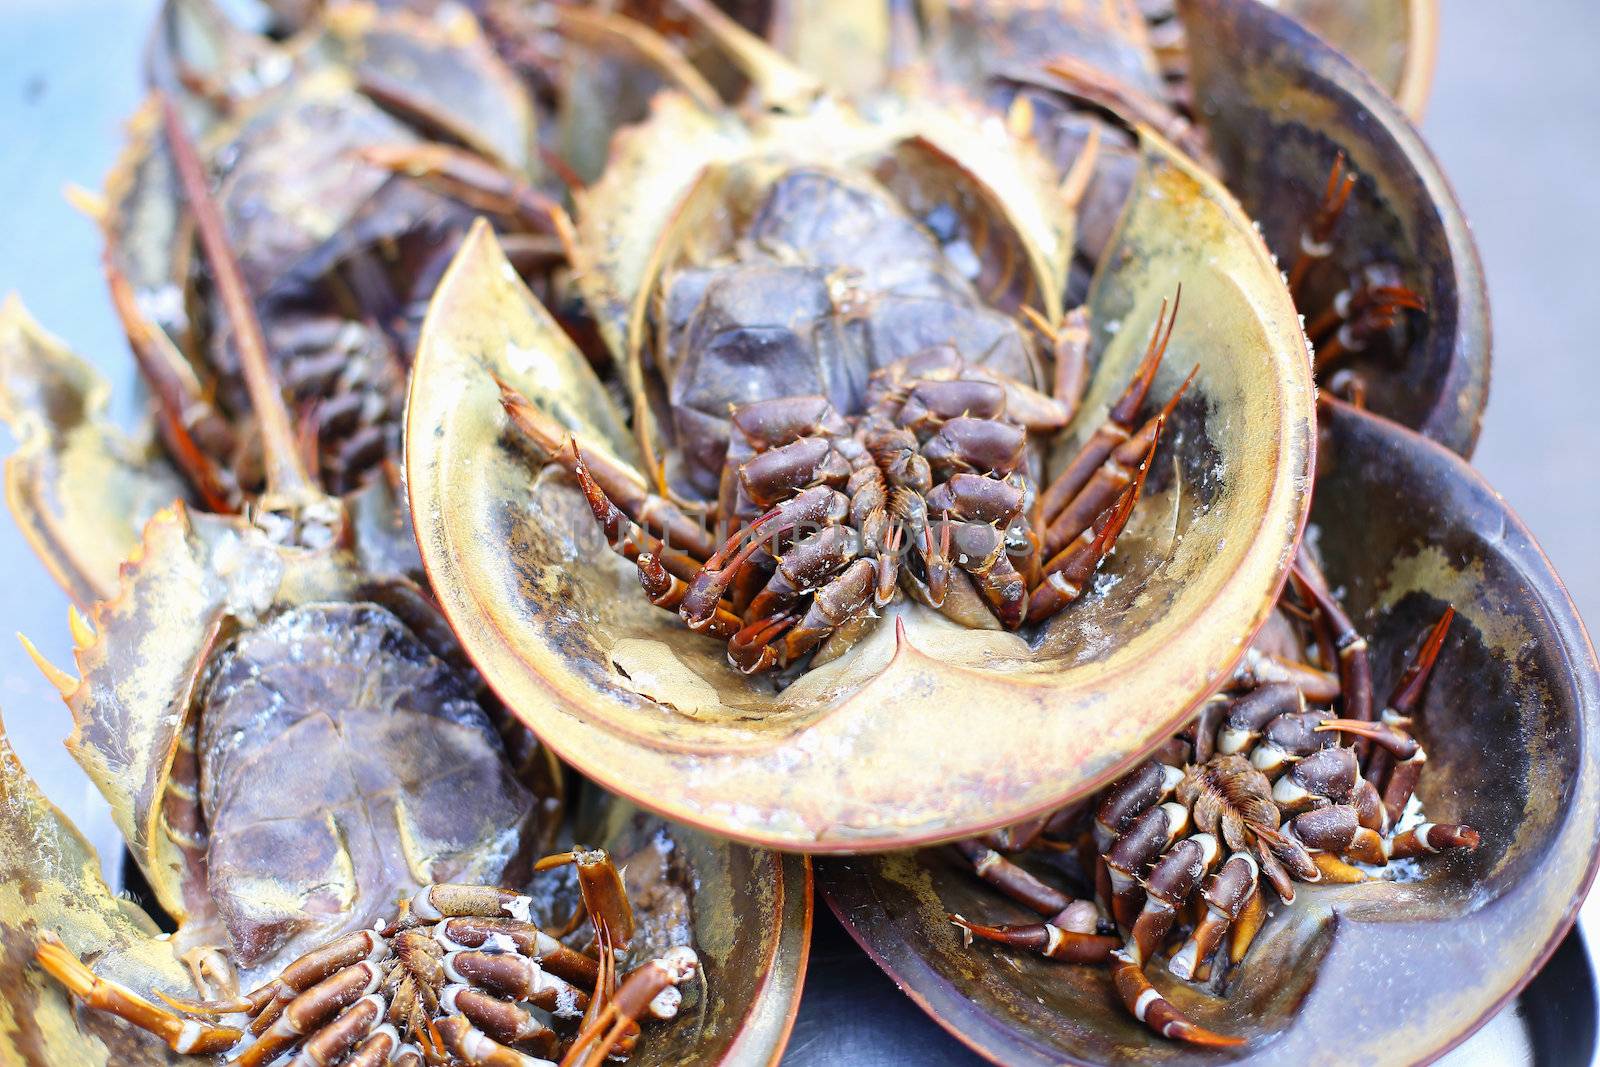 fresh horseshoe crab in market of Thailand by myrainjom01